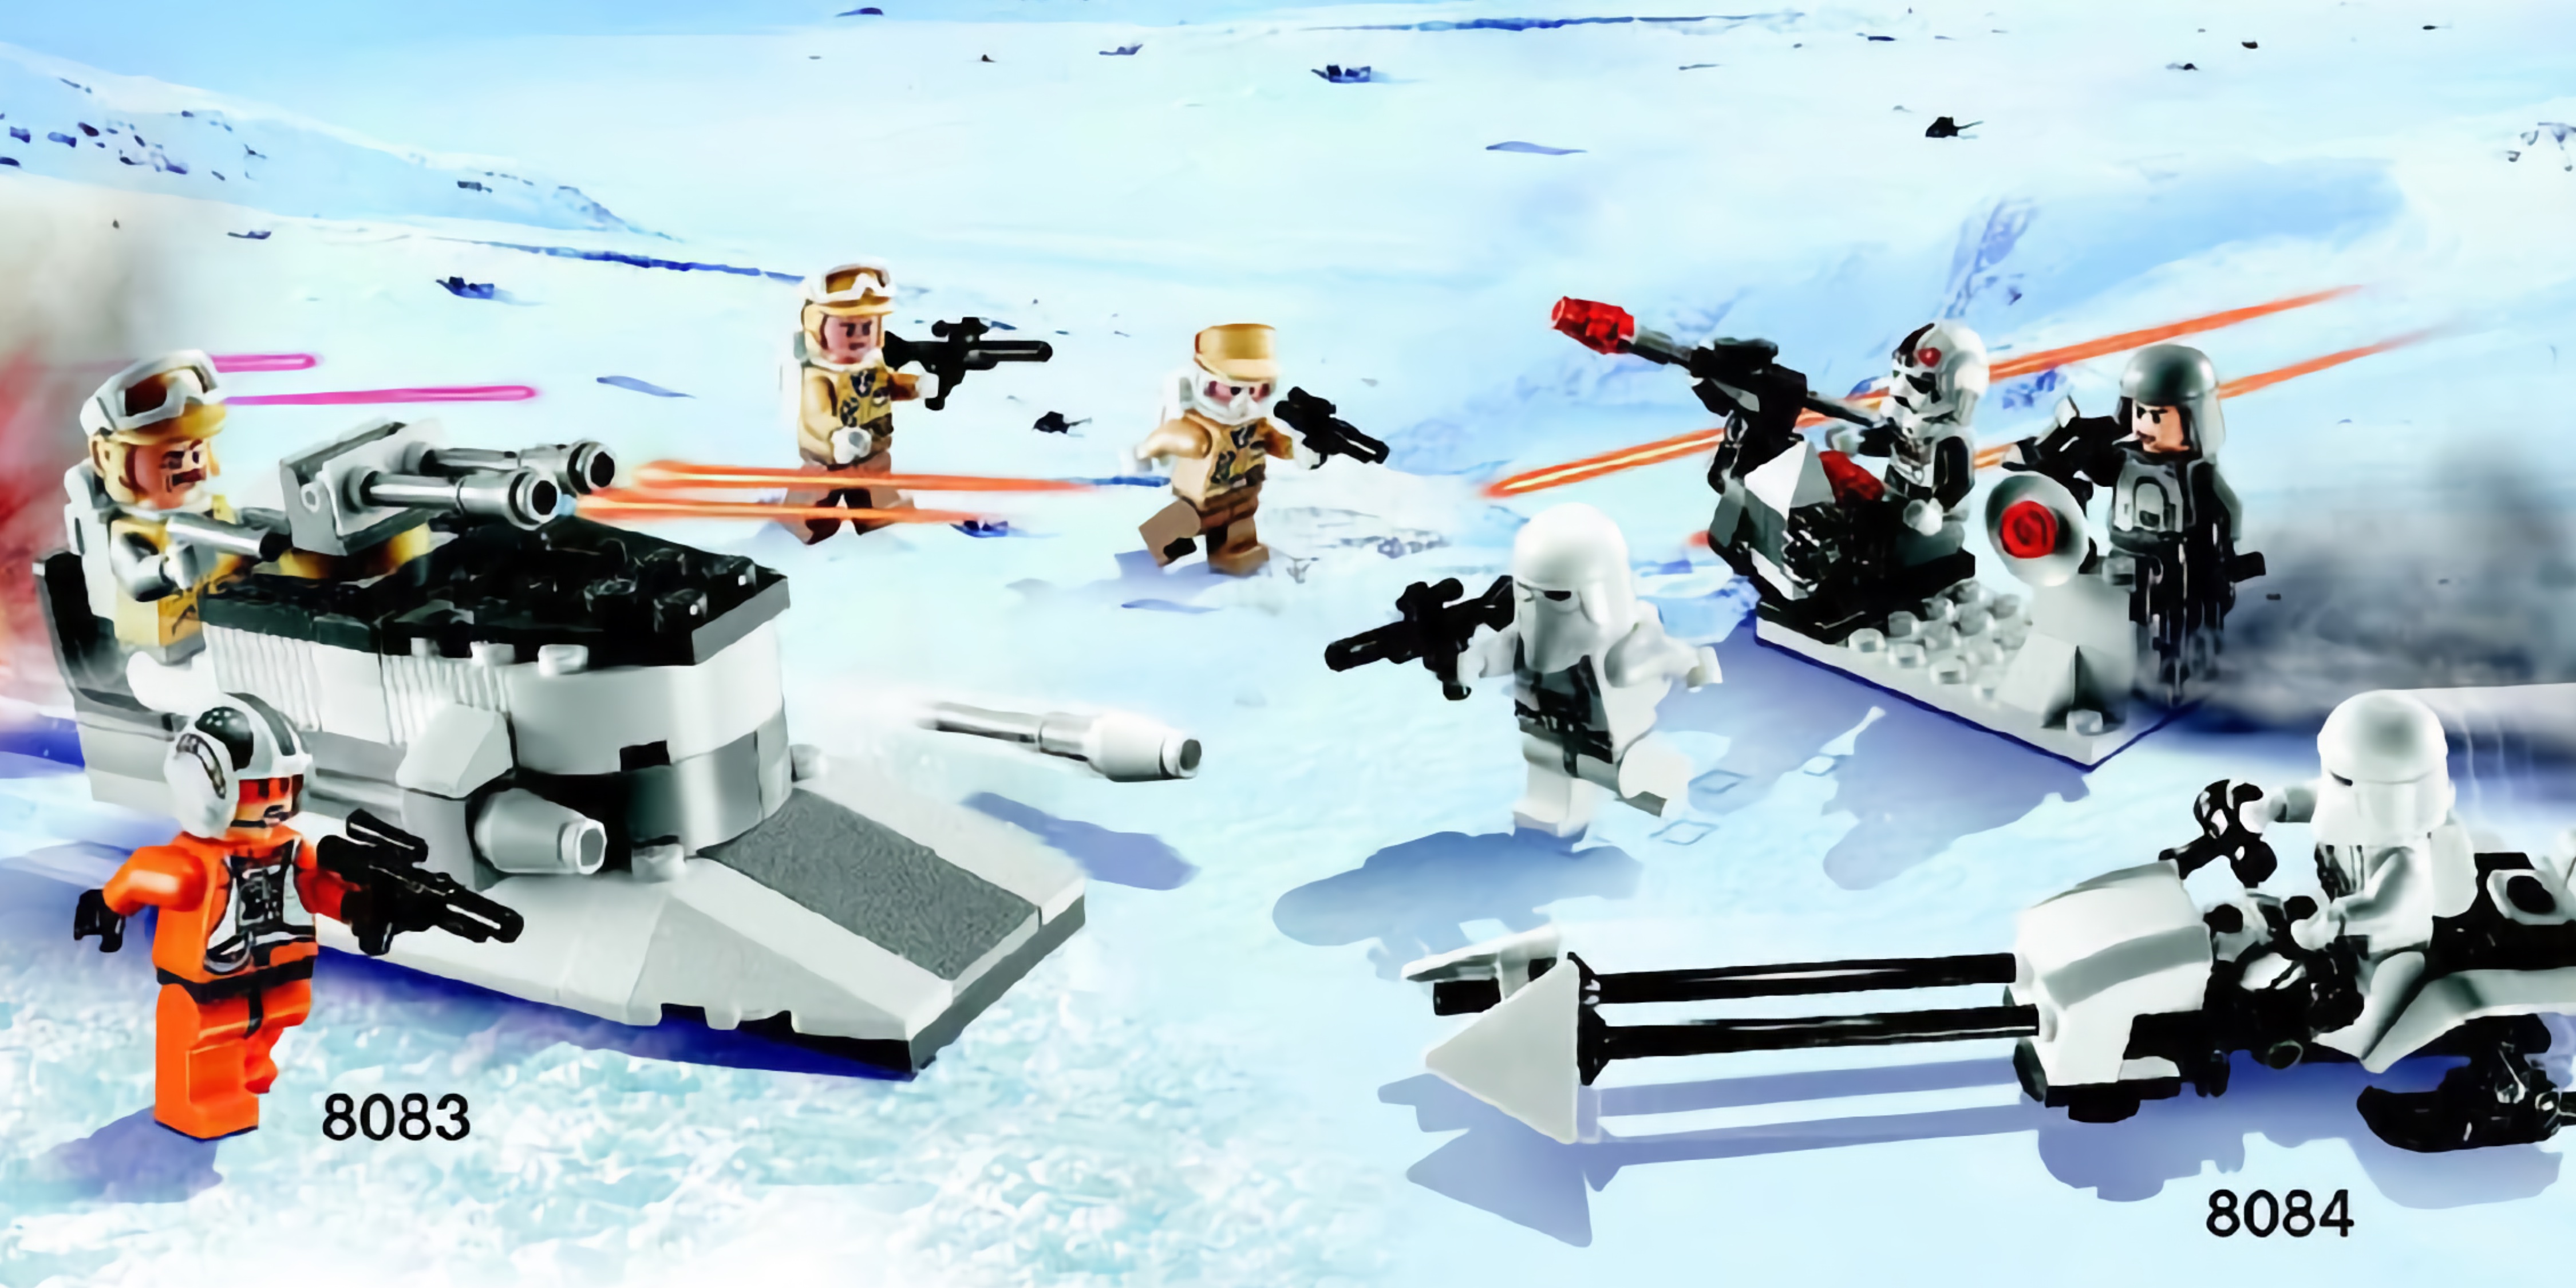 star wars lego battle pack